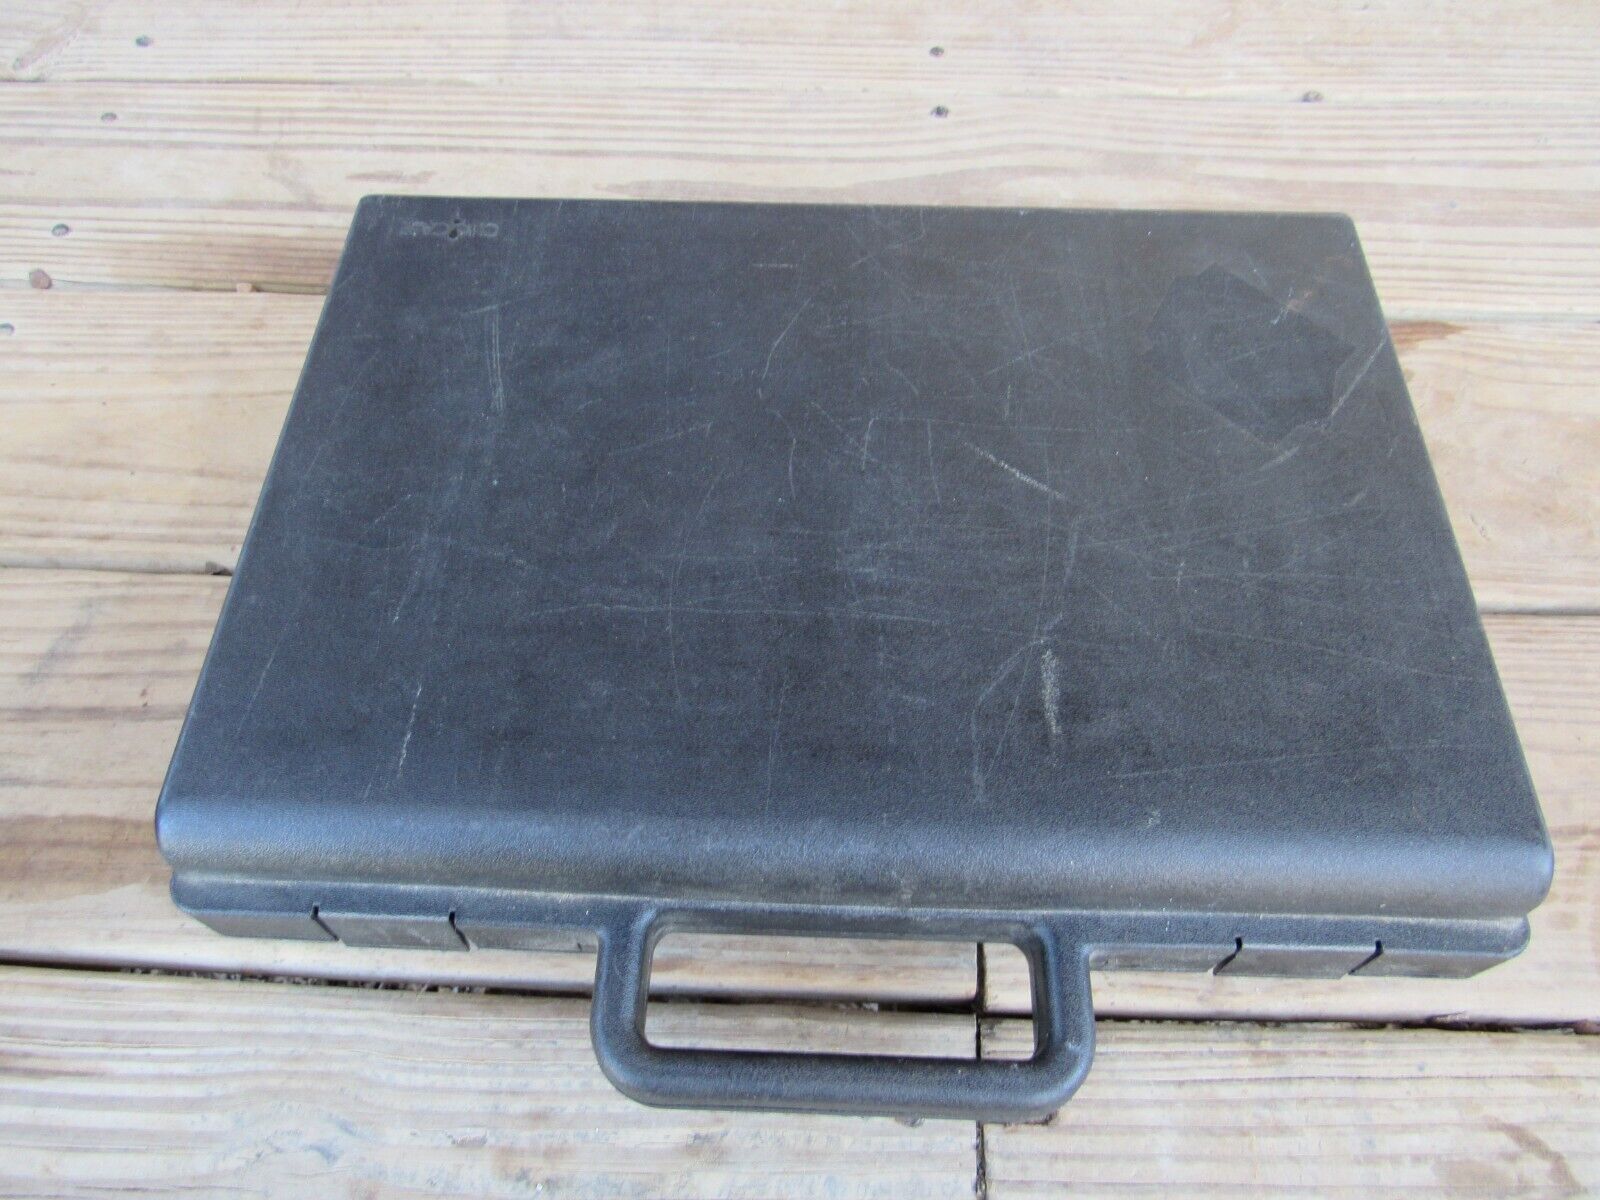 Vintage CLIK CASE Black Hard Plastic 36 Cassette Tape Storage Carrying Case